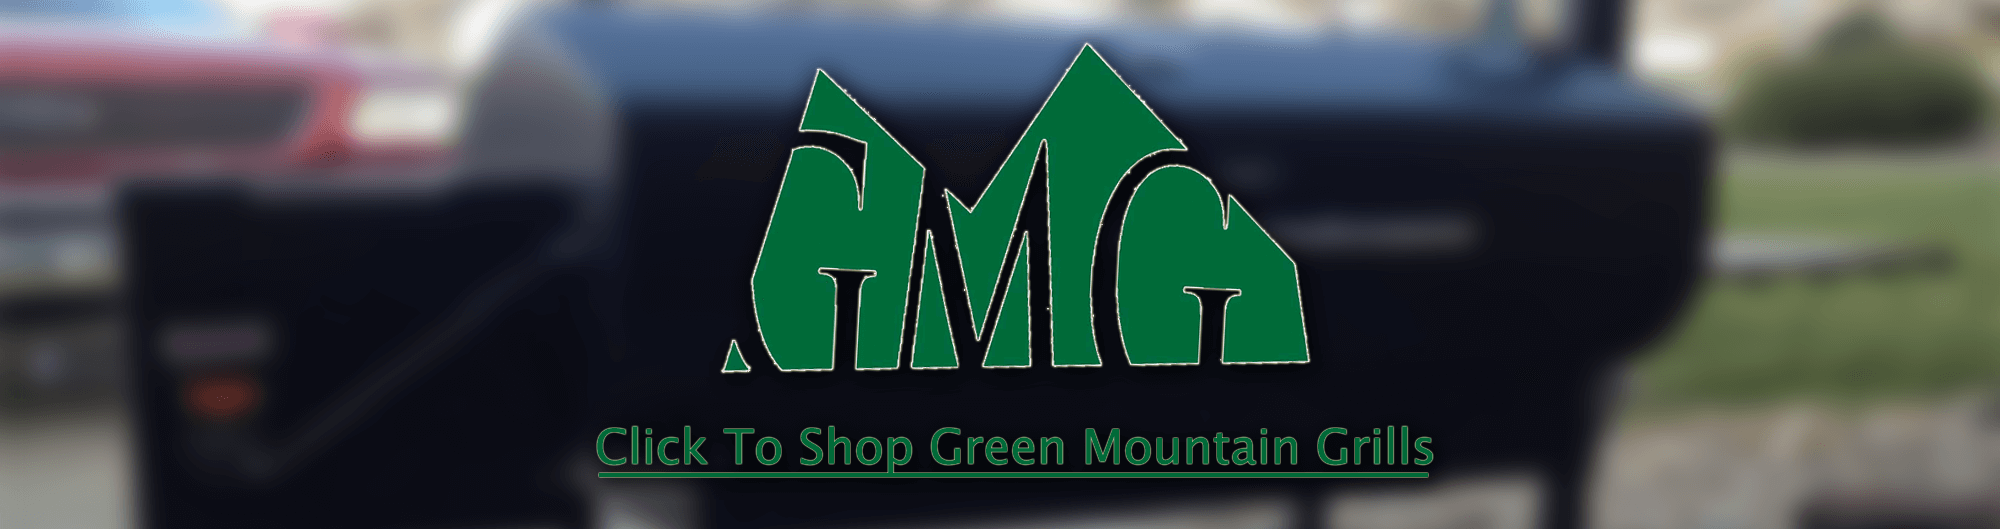 Buy Green Mountain Grills